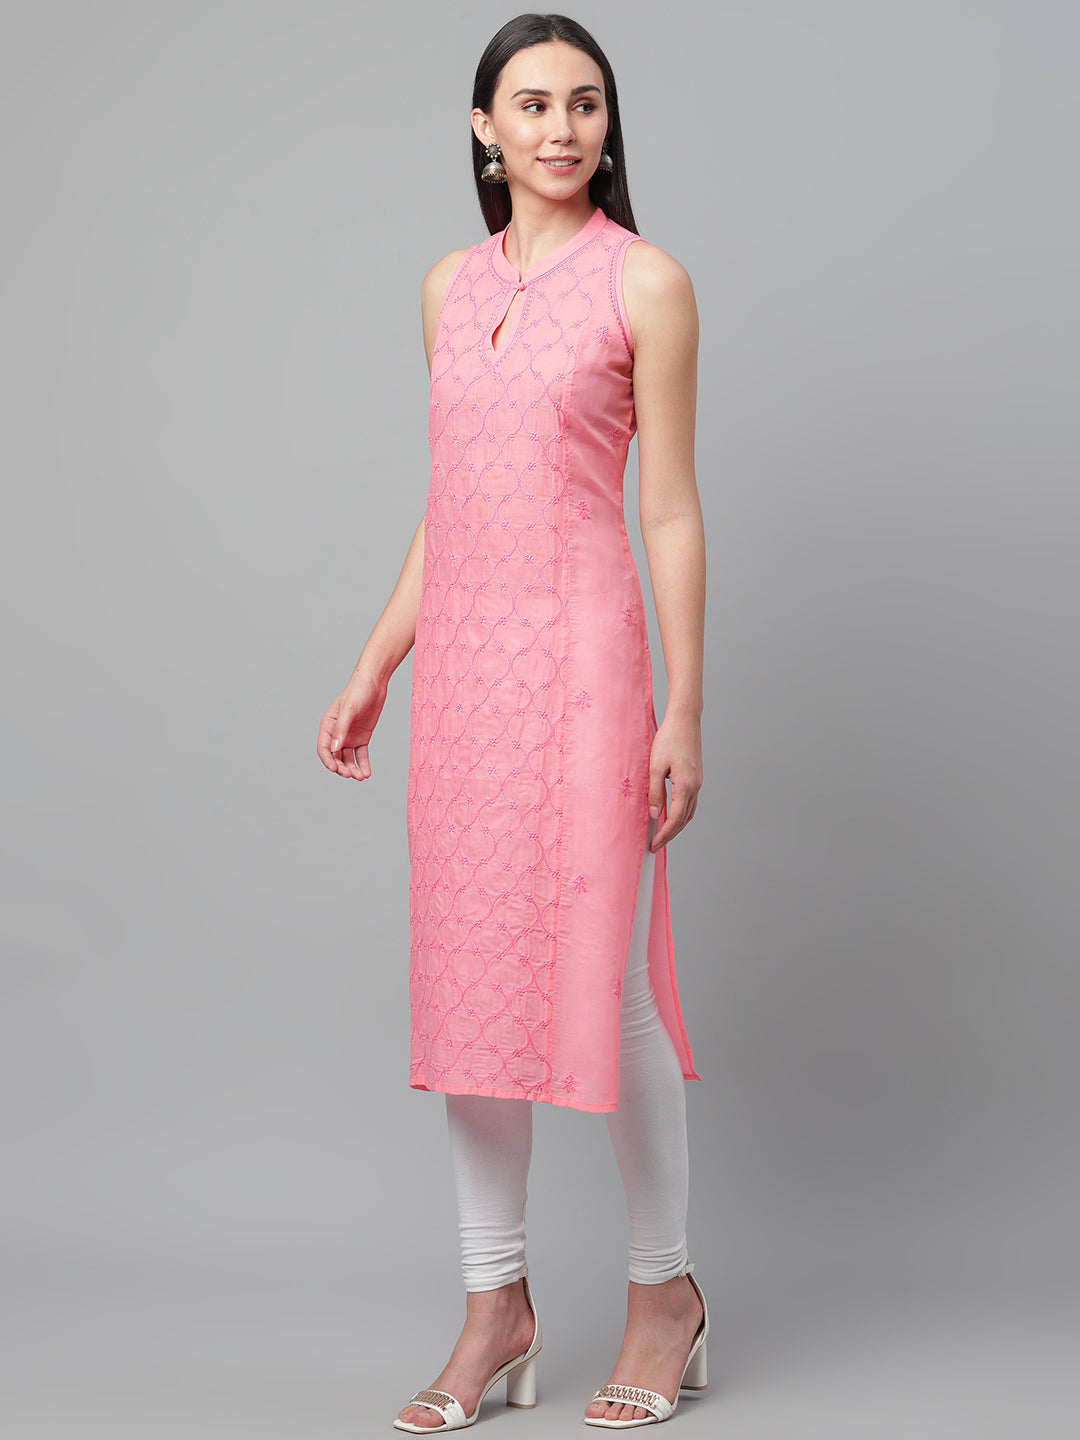 Buy ARCH ELEMENTS Cotton Designer Womens Sleeveless Kurti with Collar  |Stylish Kurta for Girls, Ladies (Orange, Large) at Amazon.in